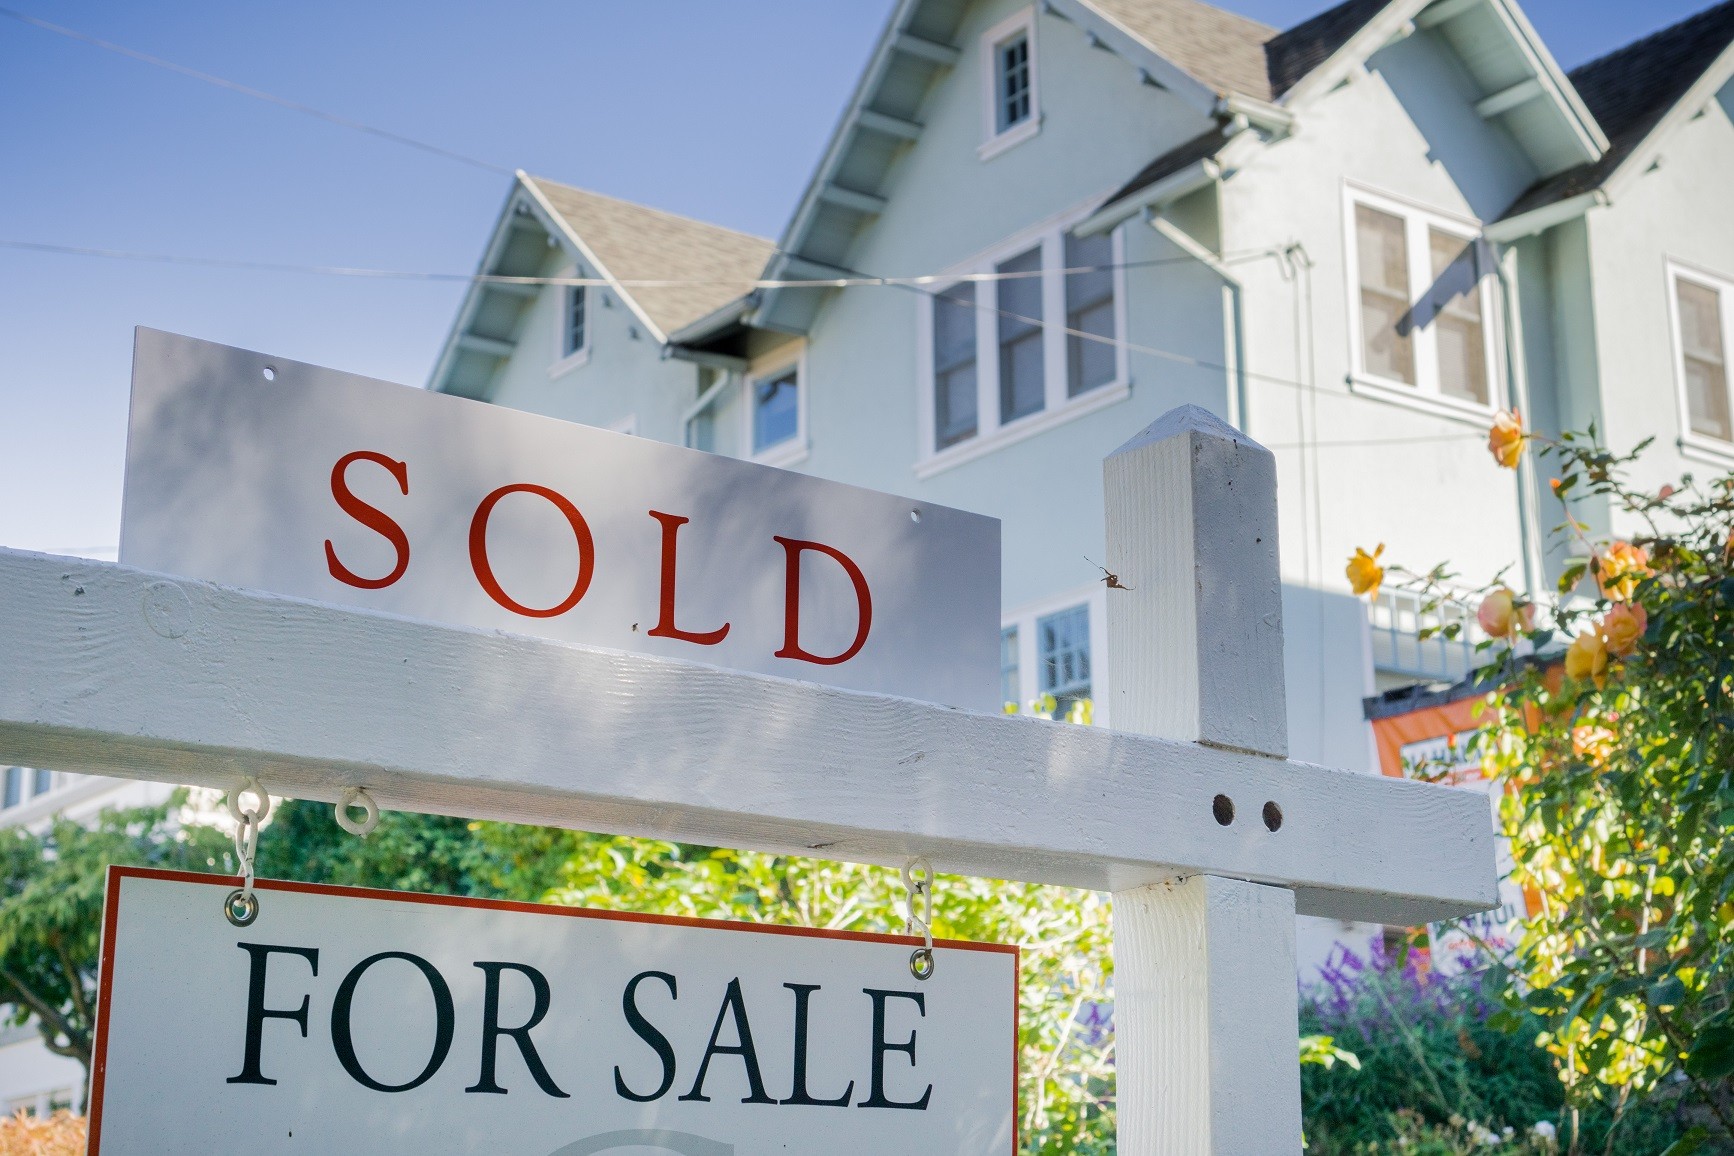 Loudoun Real Estate Report Shows ‘Shift Toward Balanced Market’ – Patch.com